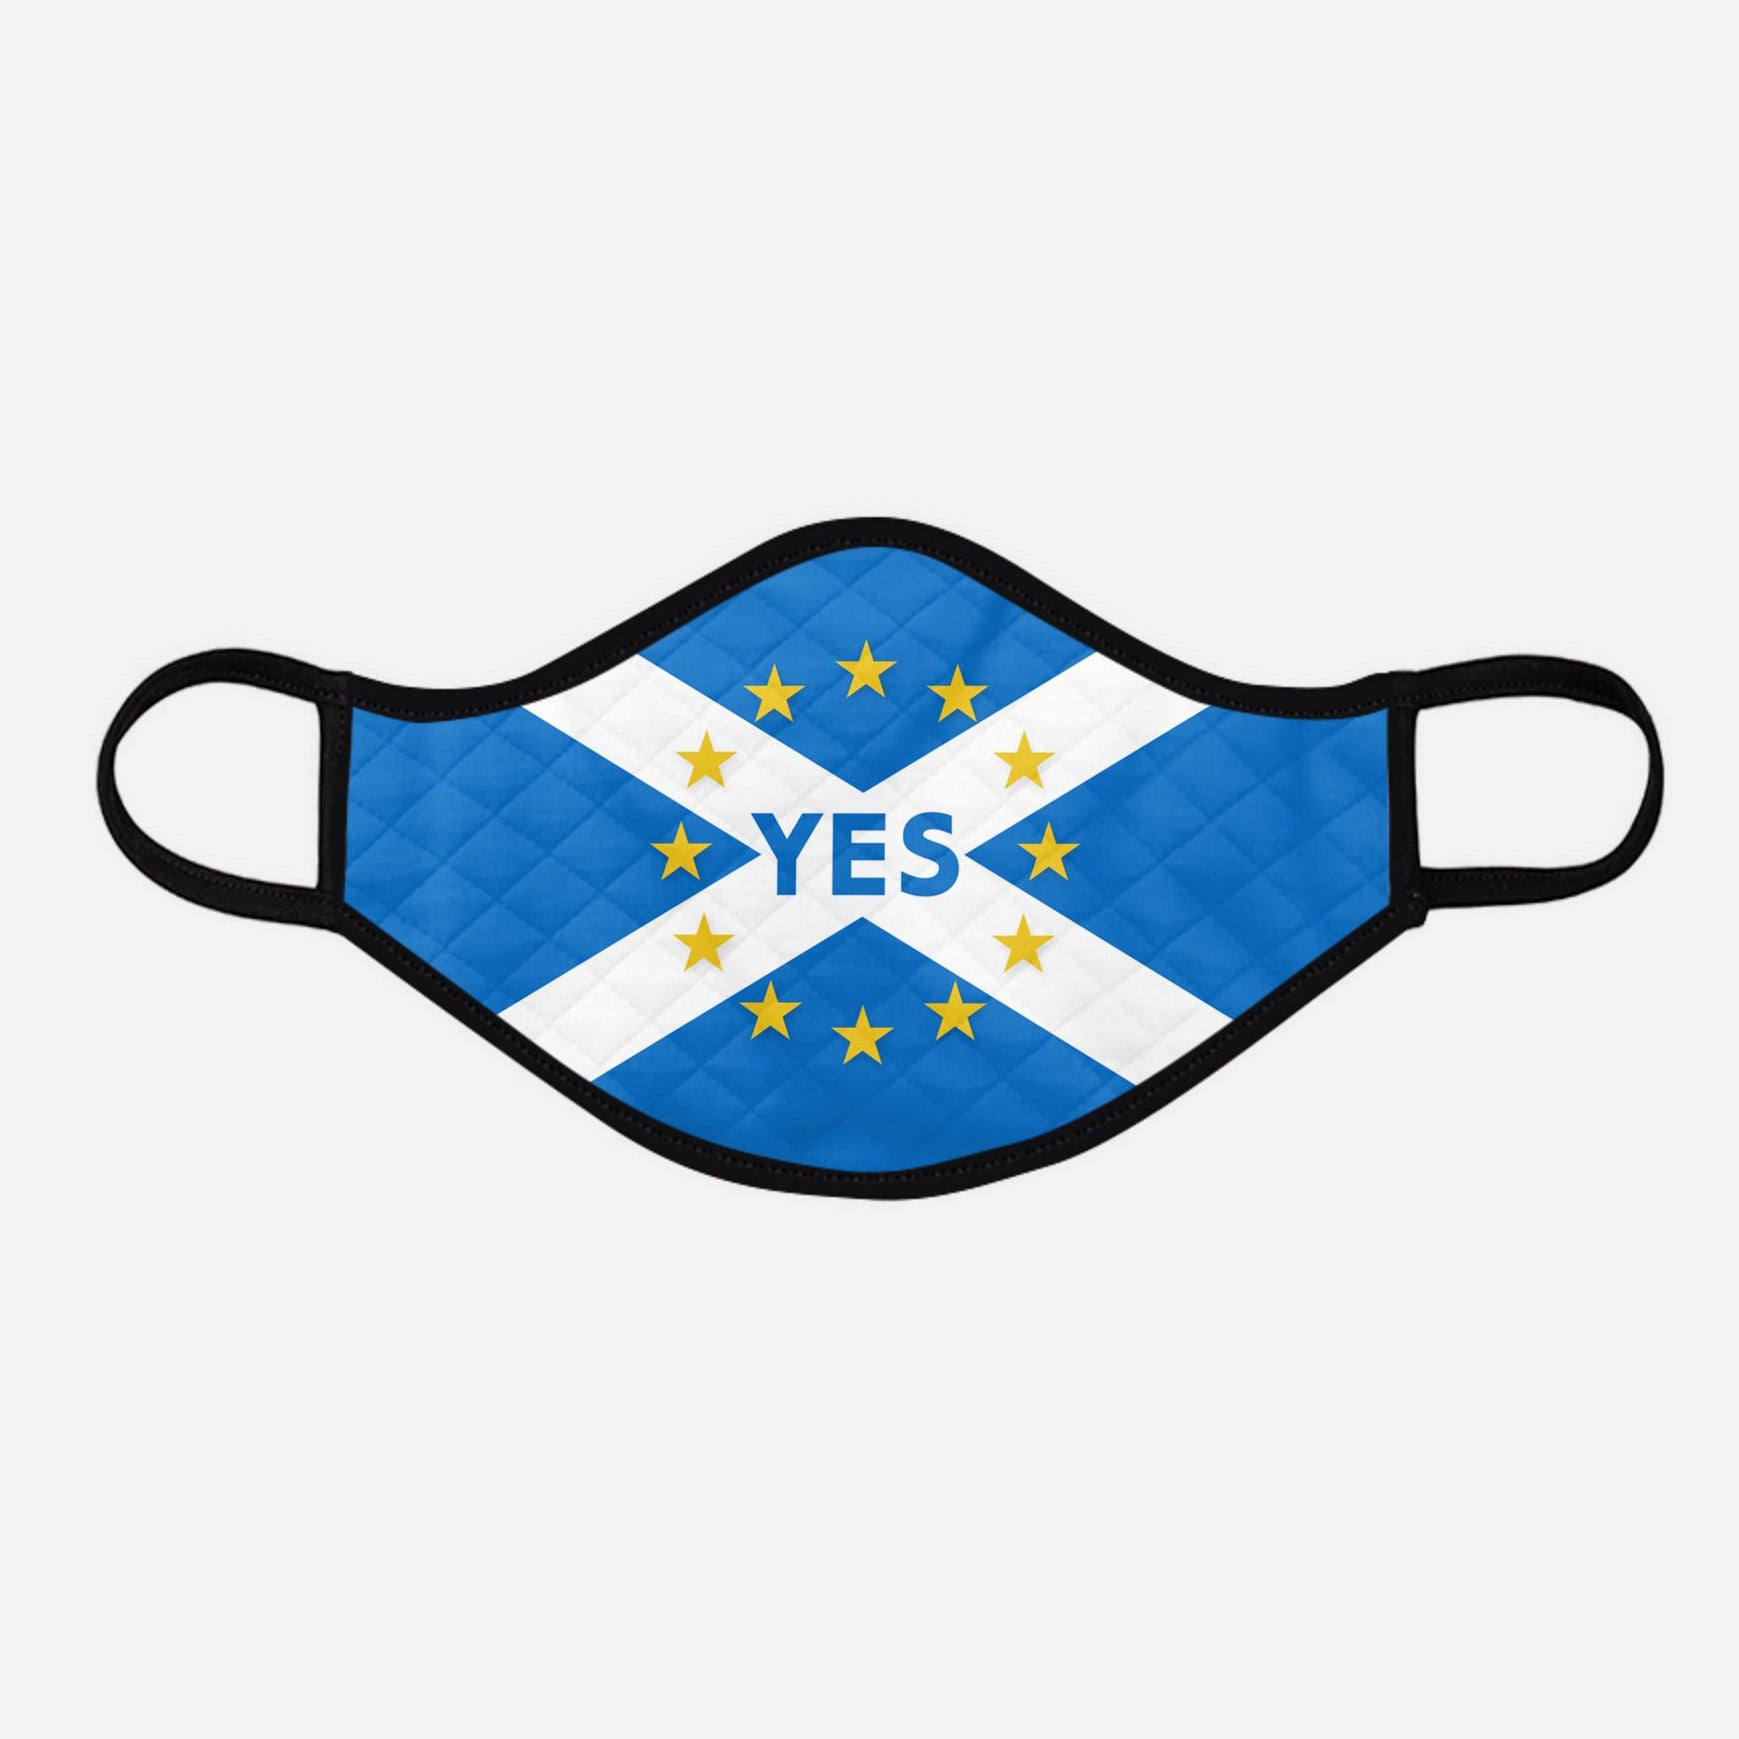 YES IT'S TIME - Alba Gu Brath - Pro EU - European Union - Nicola Sturgeon - Scottish Saltire face mask cloth covering - Nicola Sturgeon - by Steven Patrick Sim the Tartan Artisan - Stevie Tartan Guy - large